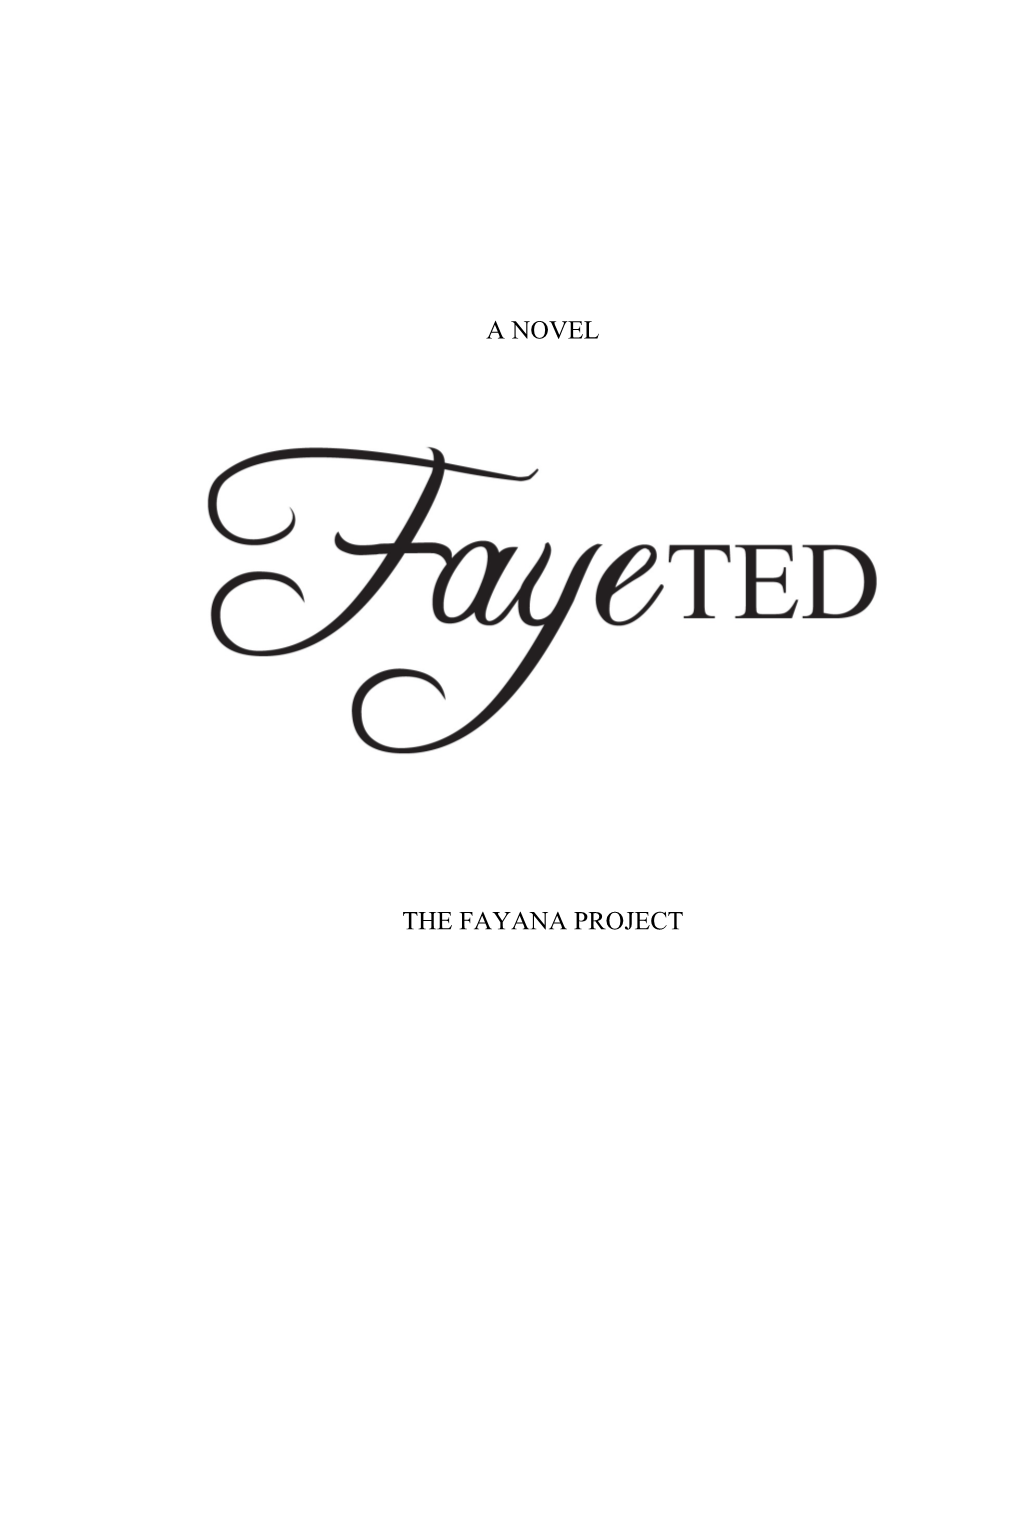 A Novel the Fayana Project